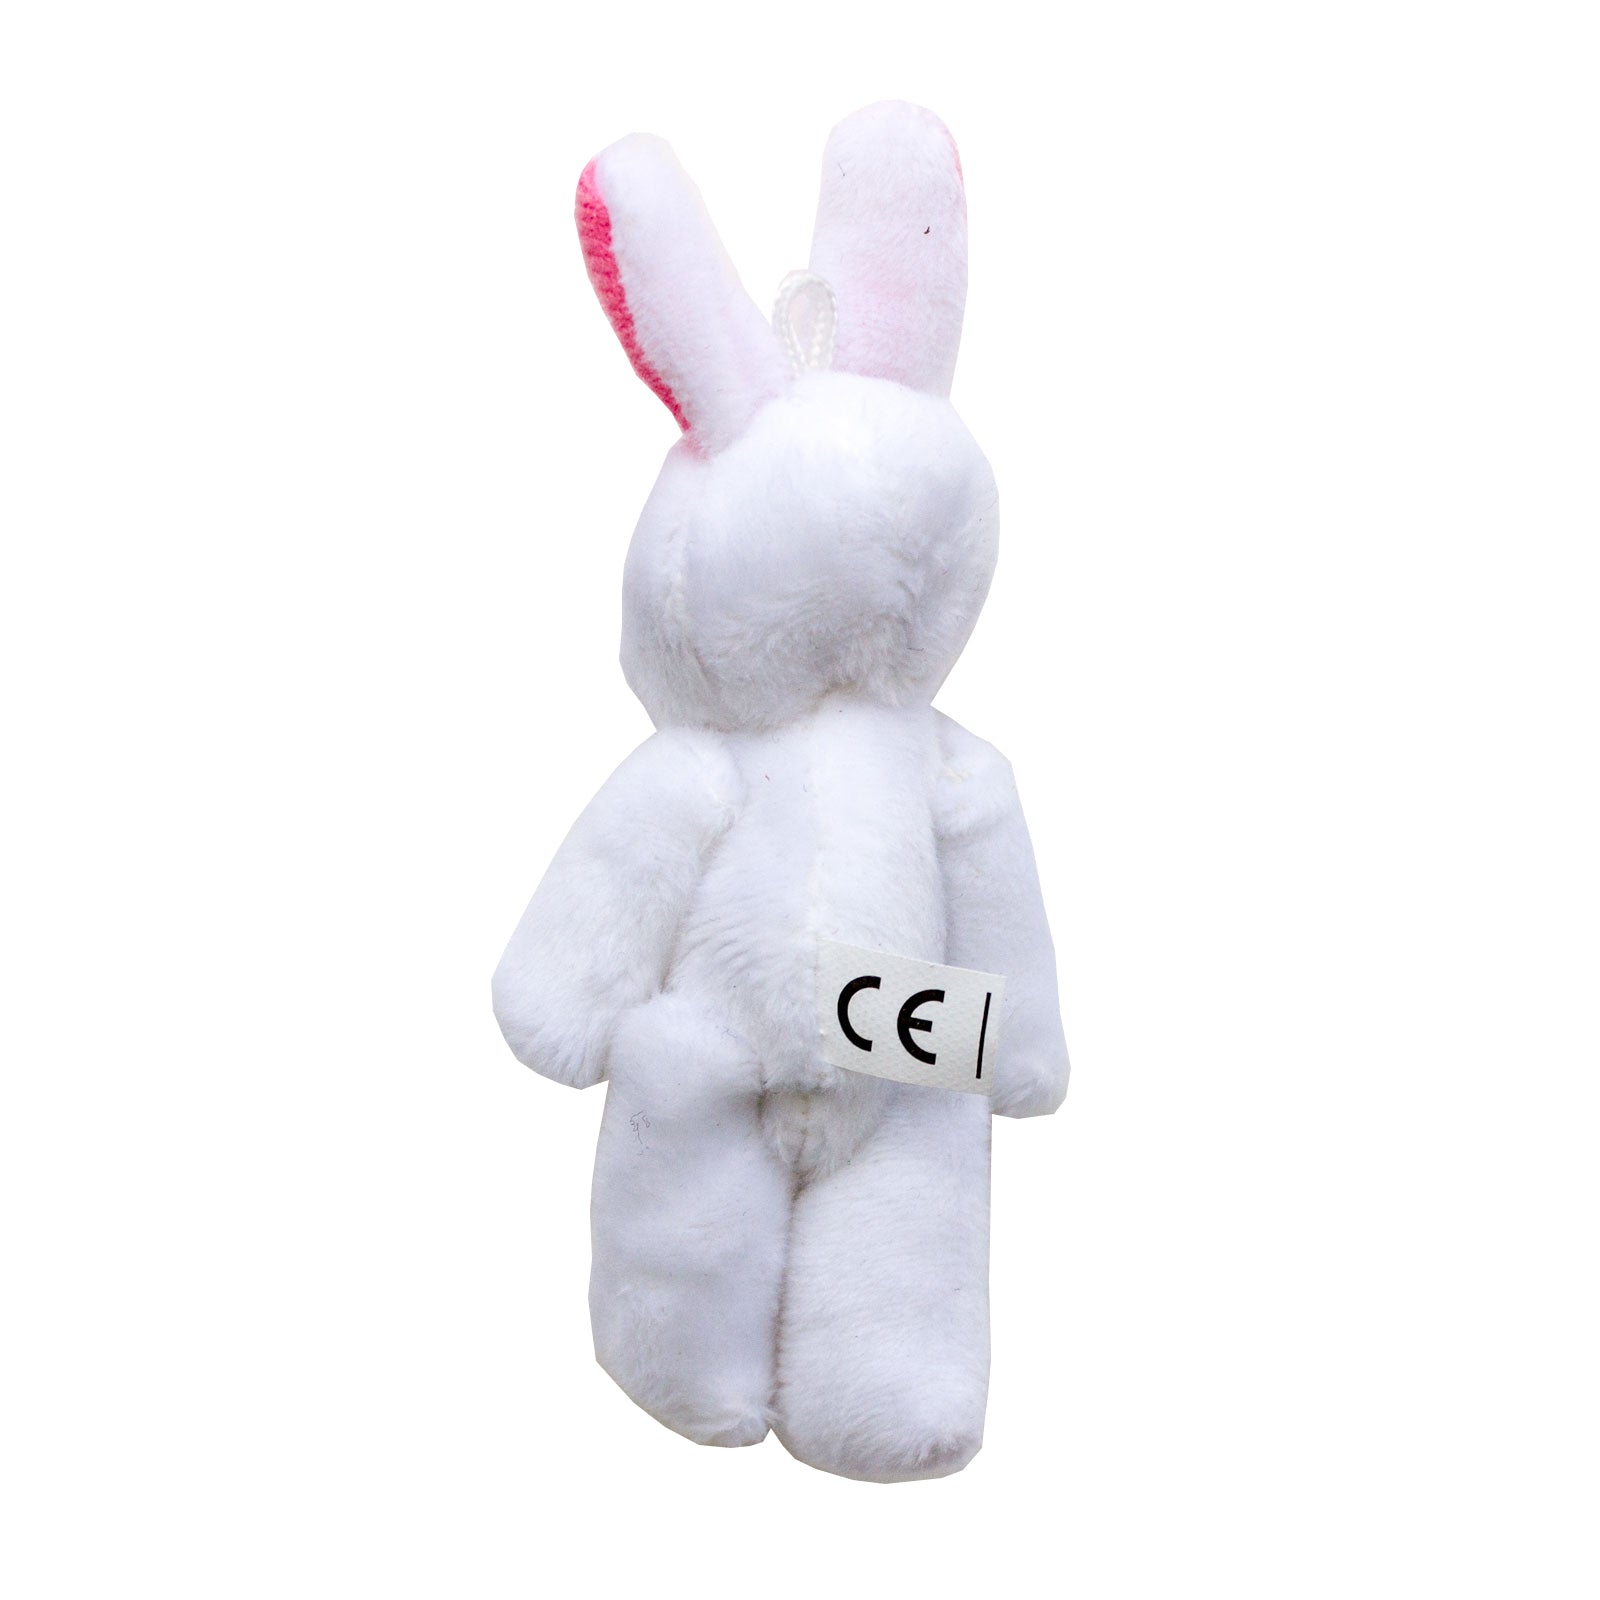 Small Rabbits X 55 - Cute Soft Adorable